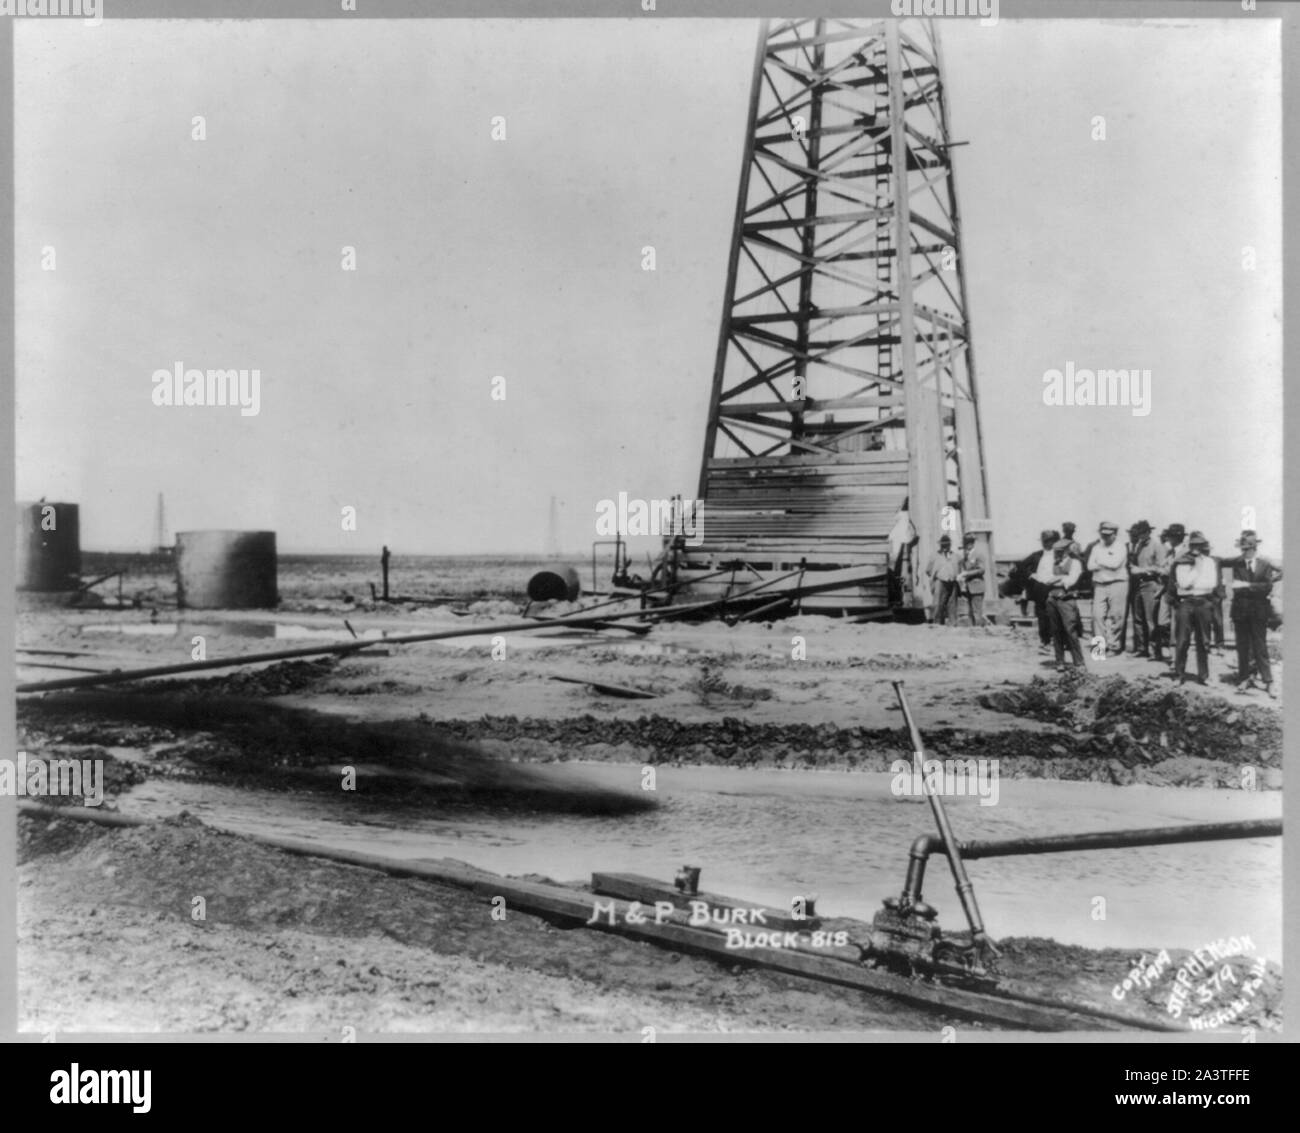 Texas oil wells M&P Burk Block 818 Stock Photo - Alamy